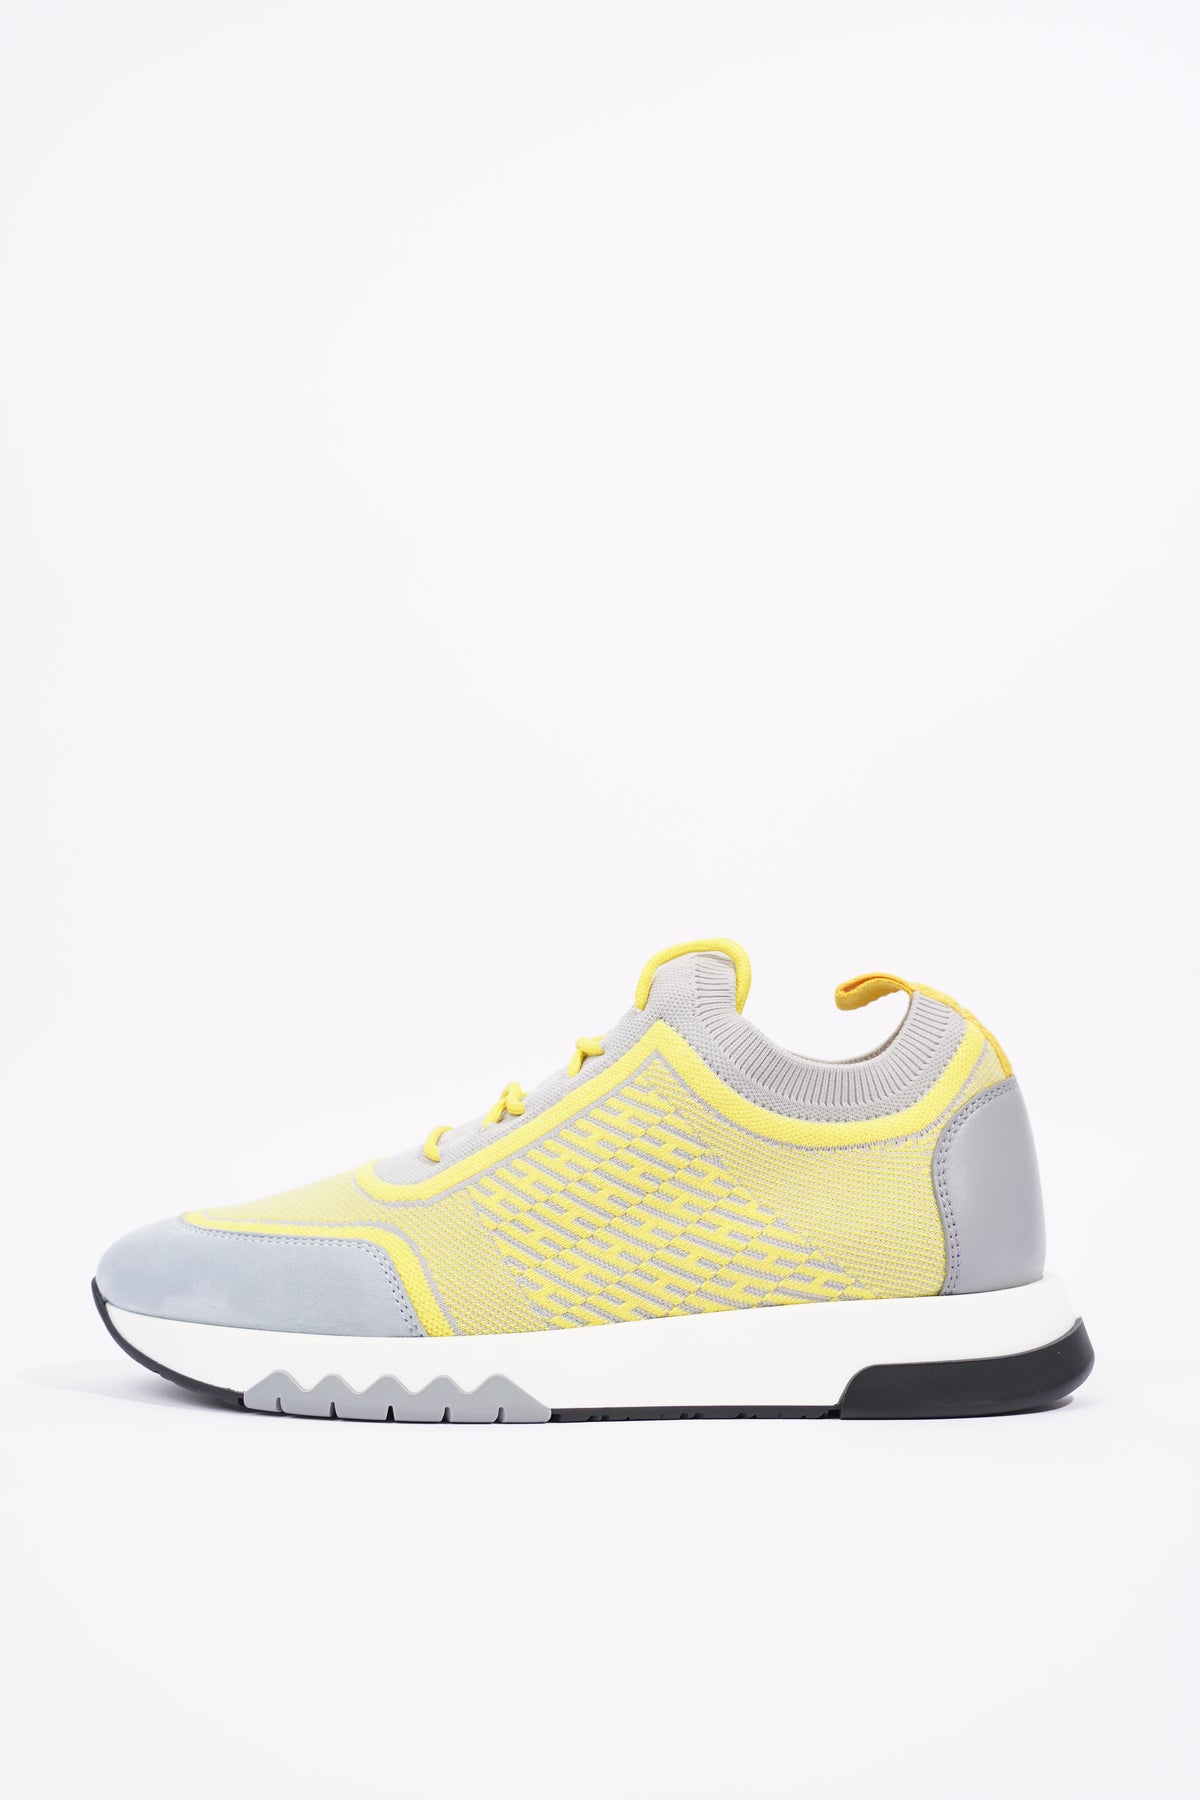 Hermes Womens Addict Sneaker Grey / Yellow EU 37 / UK 4 – Luxe